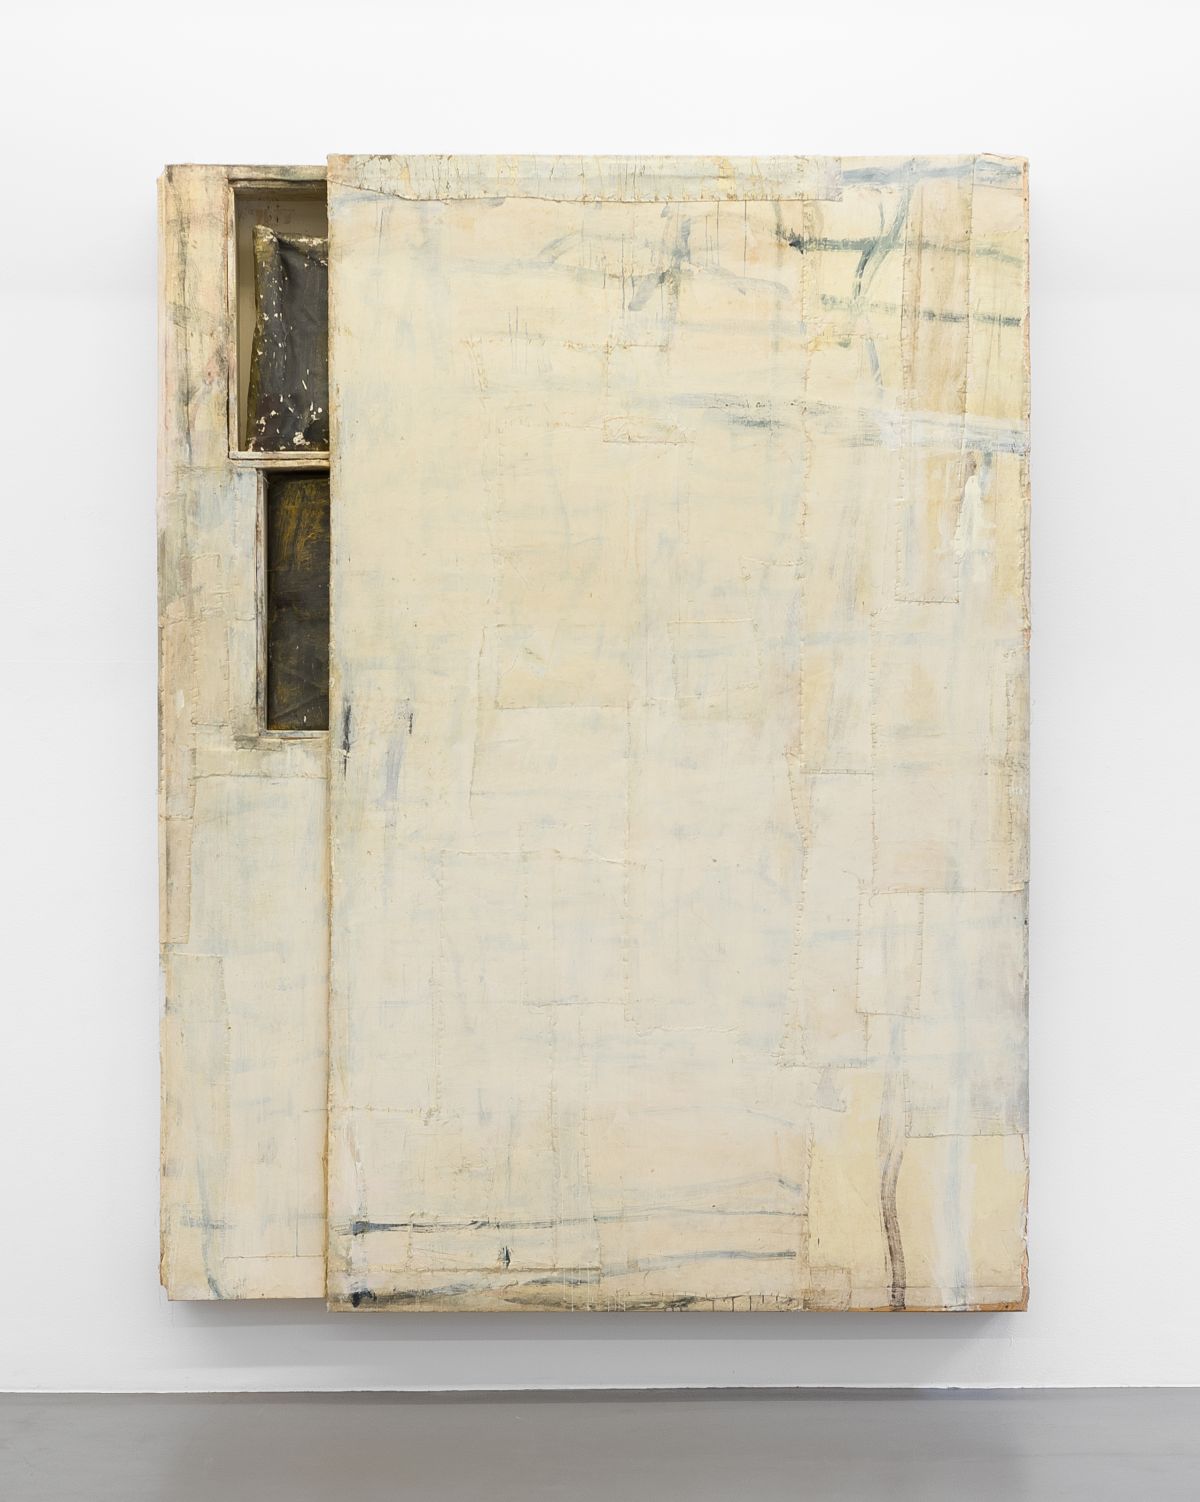 Lawrence Carroll, ‘ Untitled (slip painting)’, 2006, Öl, Wachs, Wandfarbe, Heftklammern, Leinwand auf Holz, 2 bemalte Planen